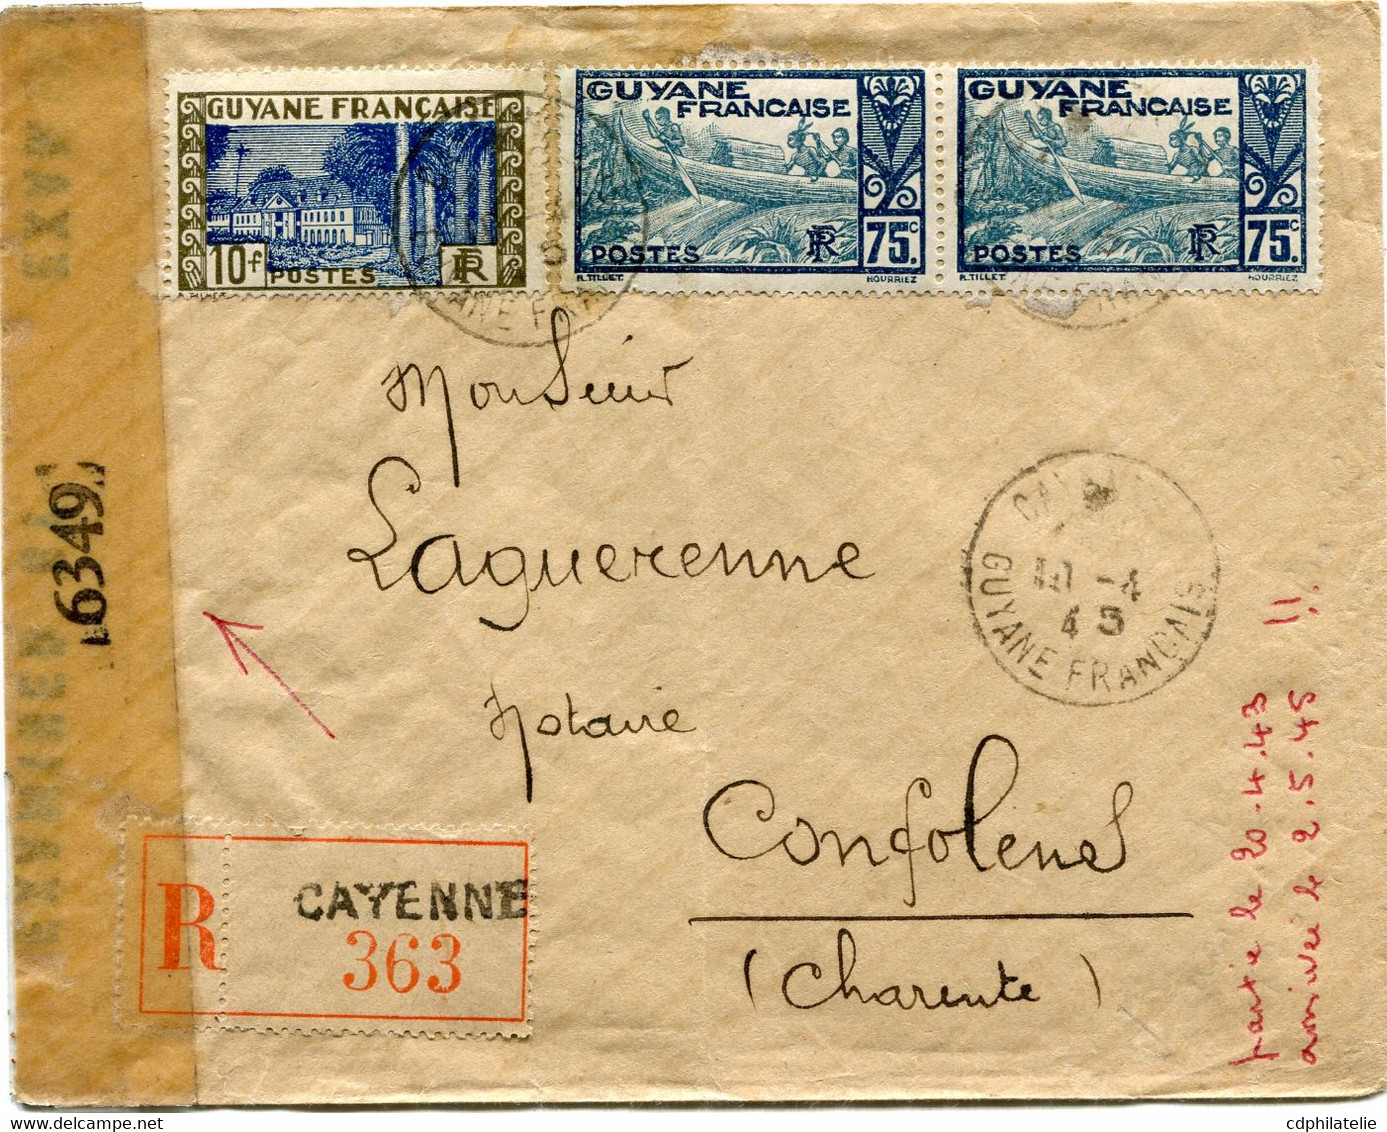 GUYANE FRANCAISE LETTRE RECOMMANDEE CENSUREE DEPART CAYENNE 10-4-45 GUINEE FRANCAISE POUR LA FRANCE - Covers & Documents